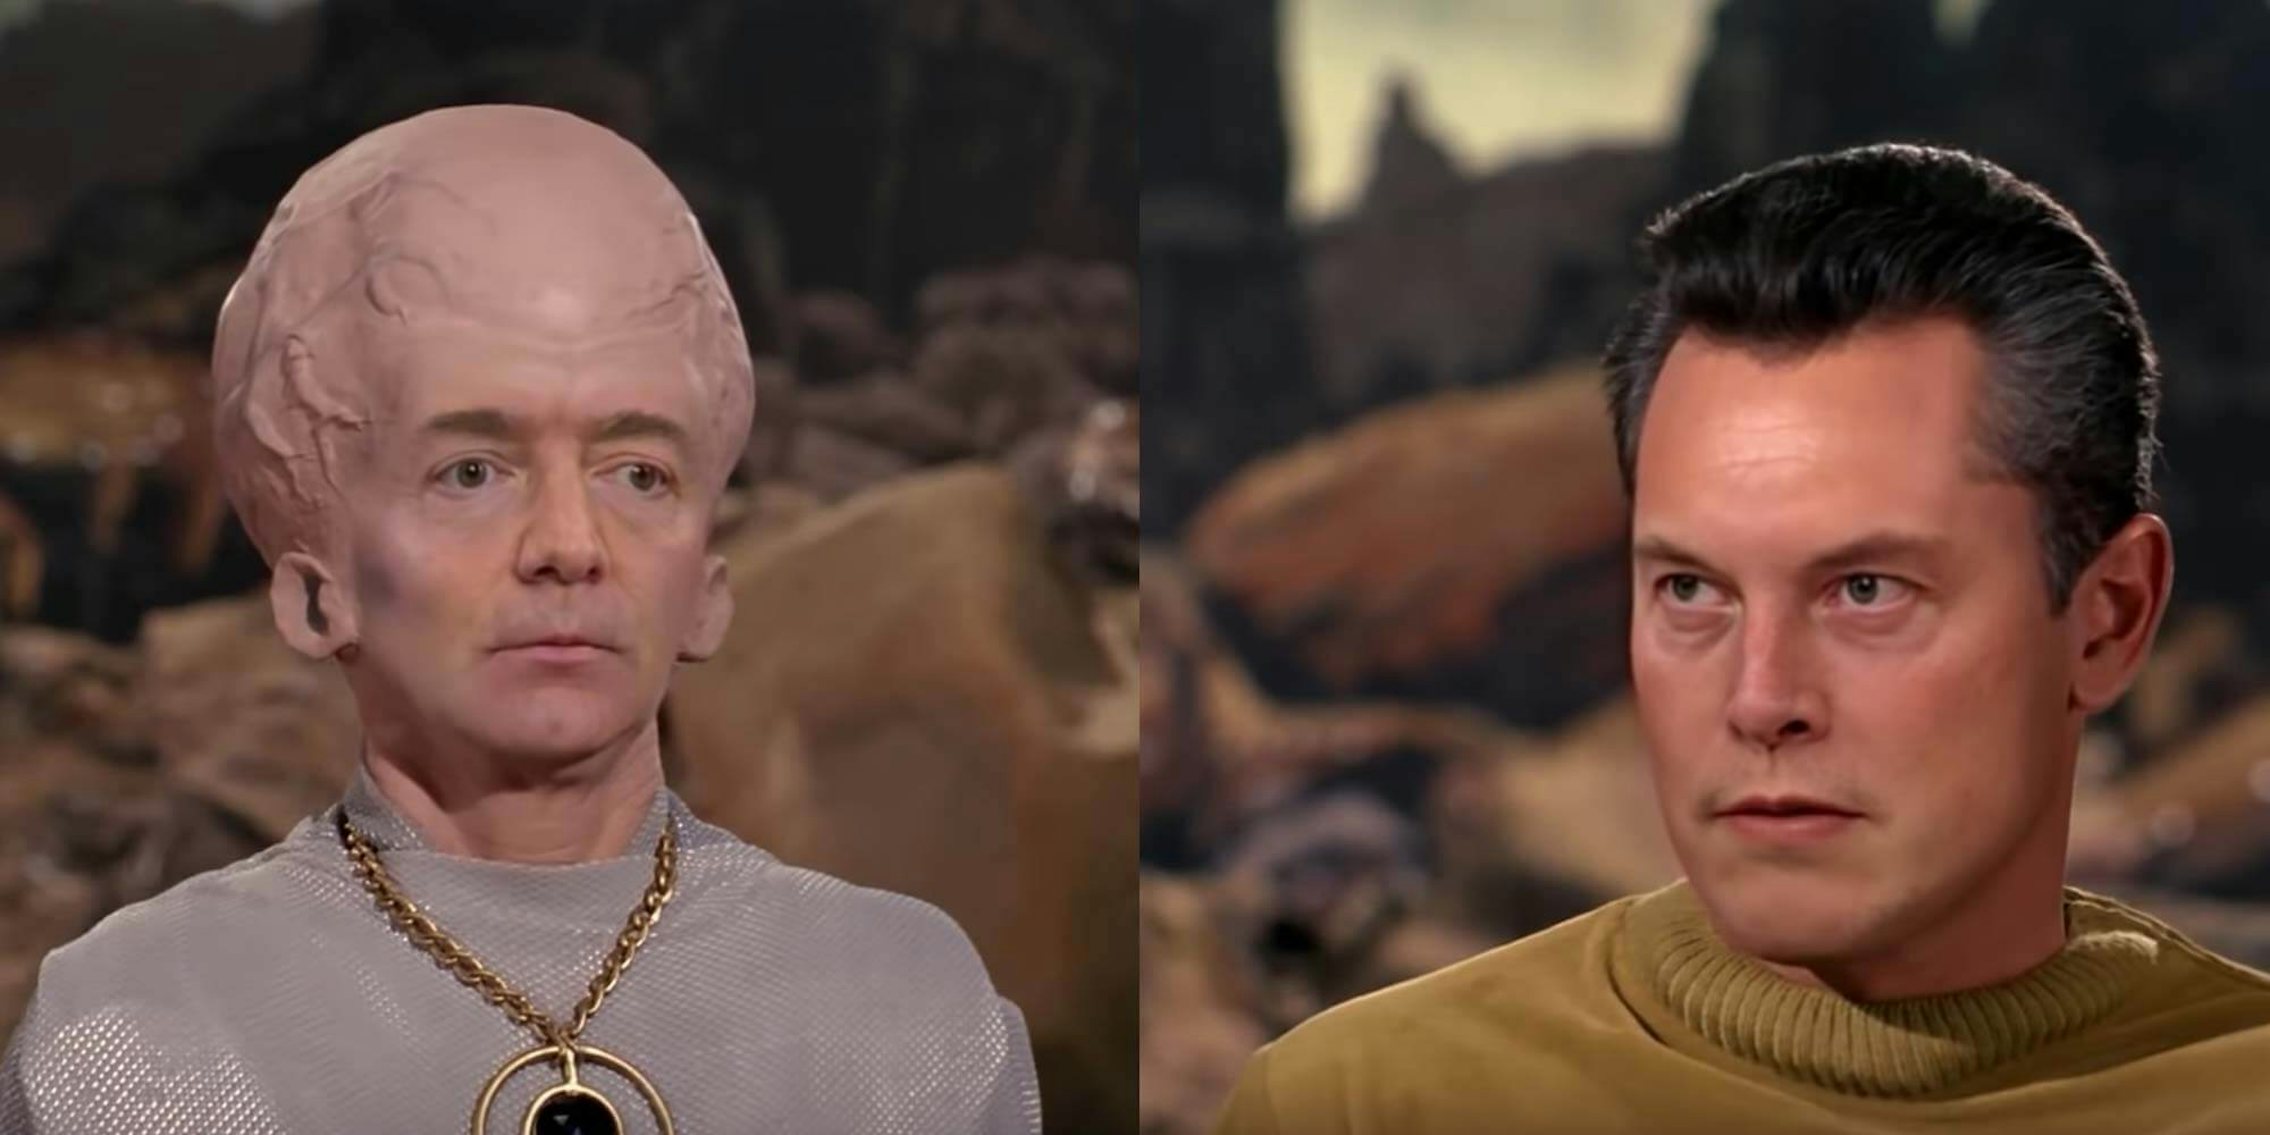 Jeff Bezos and Elon Musk Star Trek deepfake